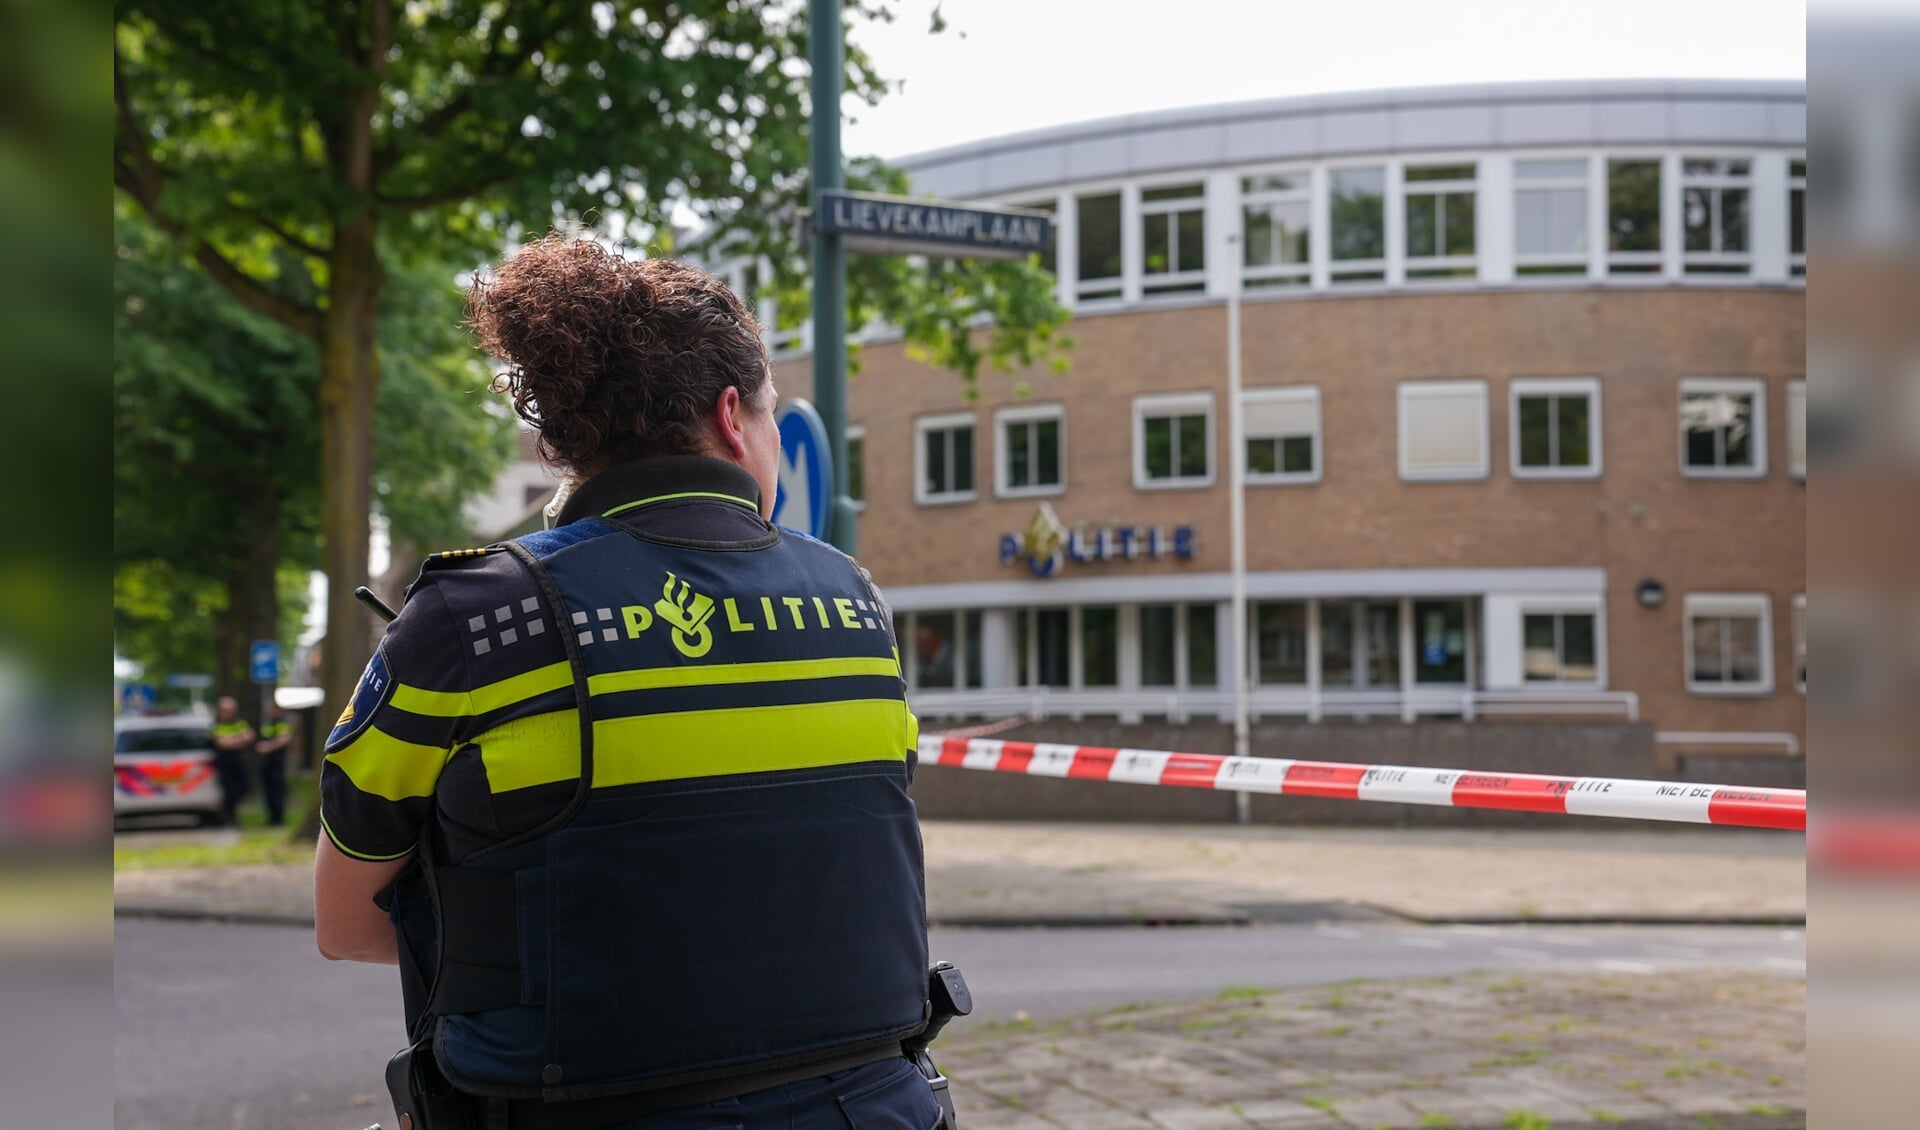 Bommelding bij politiebureau in Oss. (Foto: Gabor Heeres, Foto Mallo)